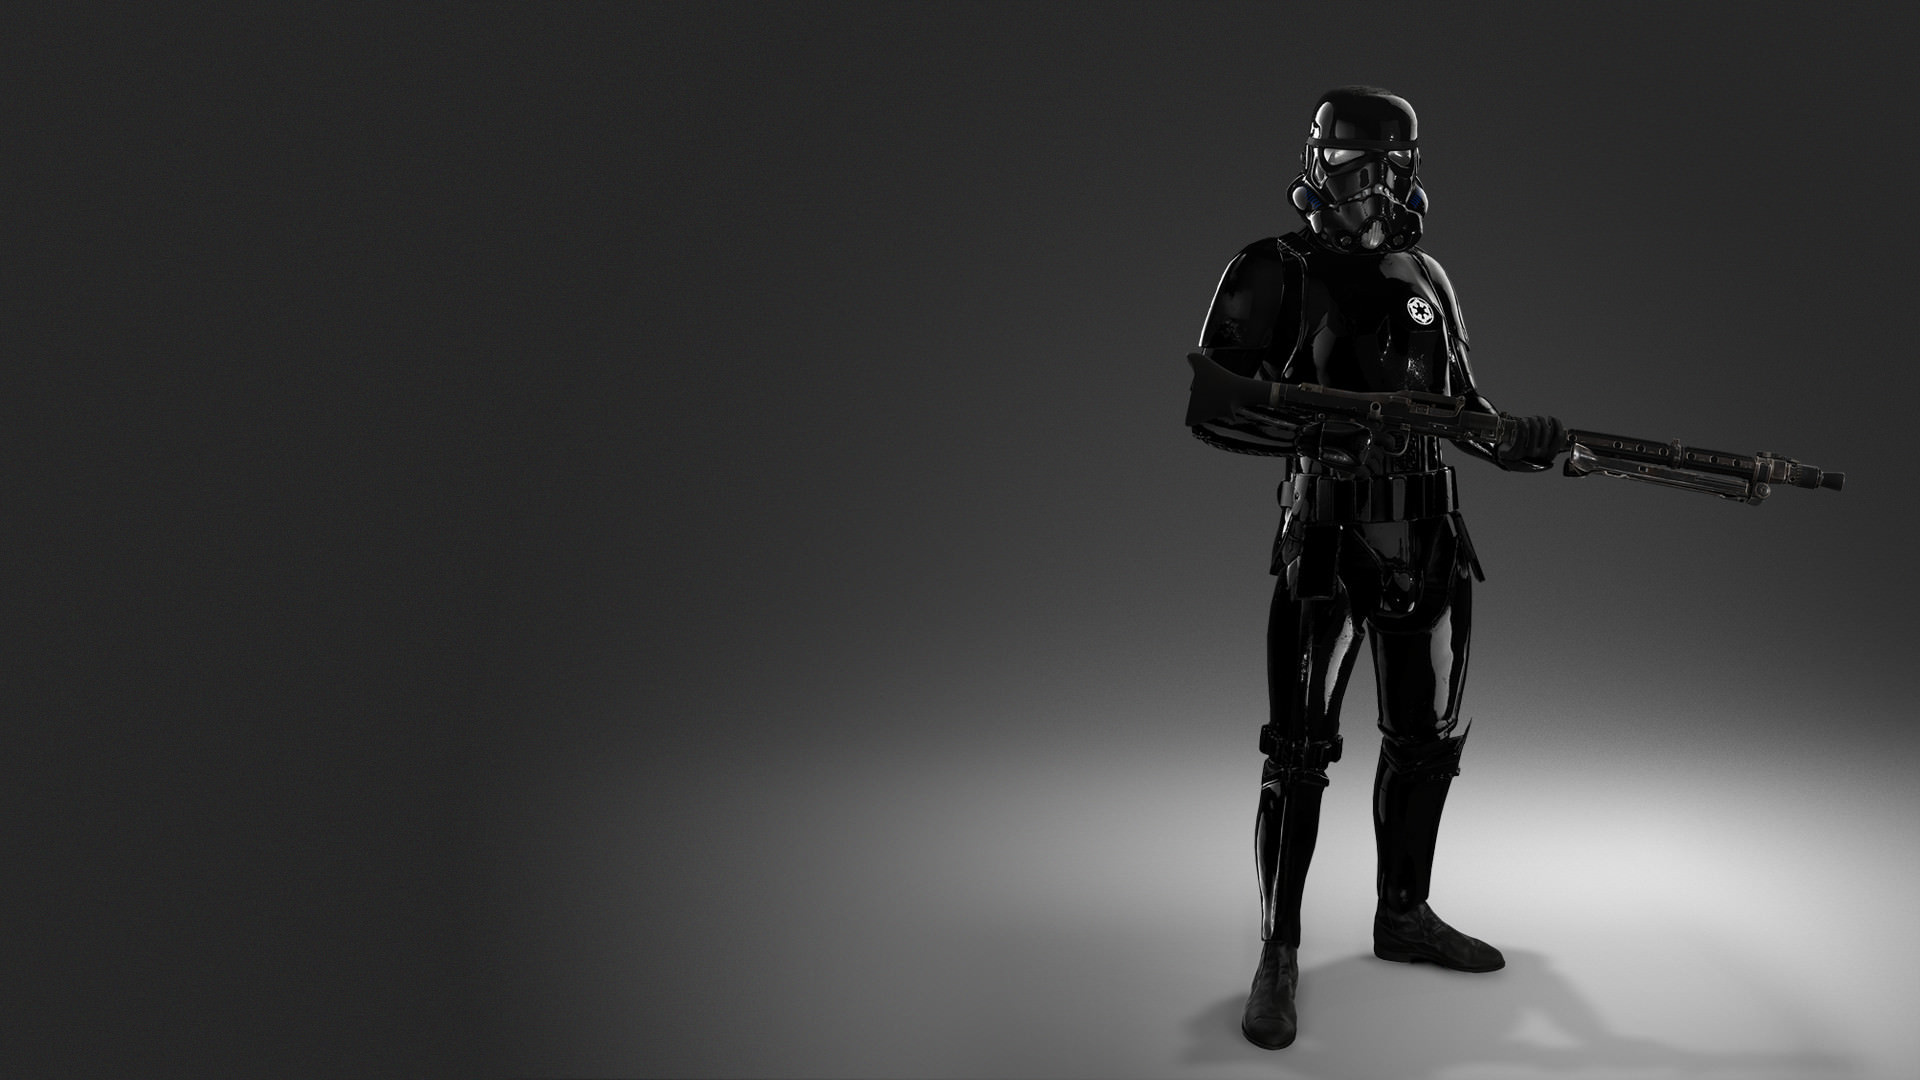 Shadow Trooper confirmed as appearance option! : StarWarsBattlefront